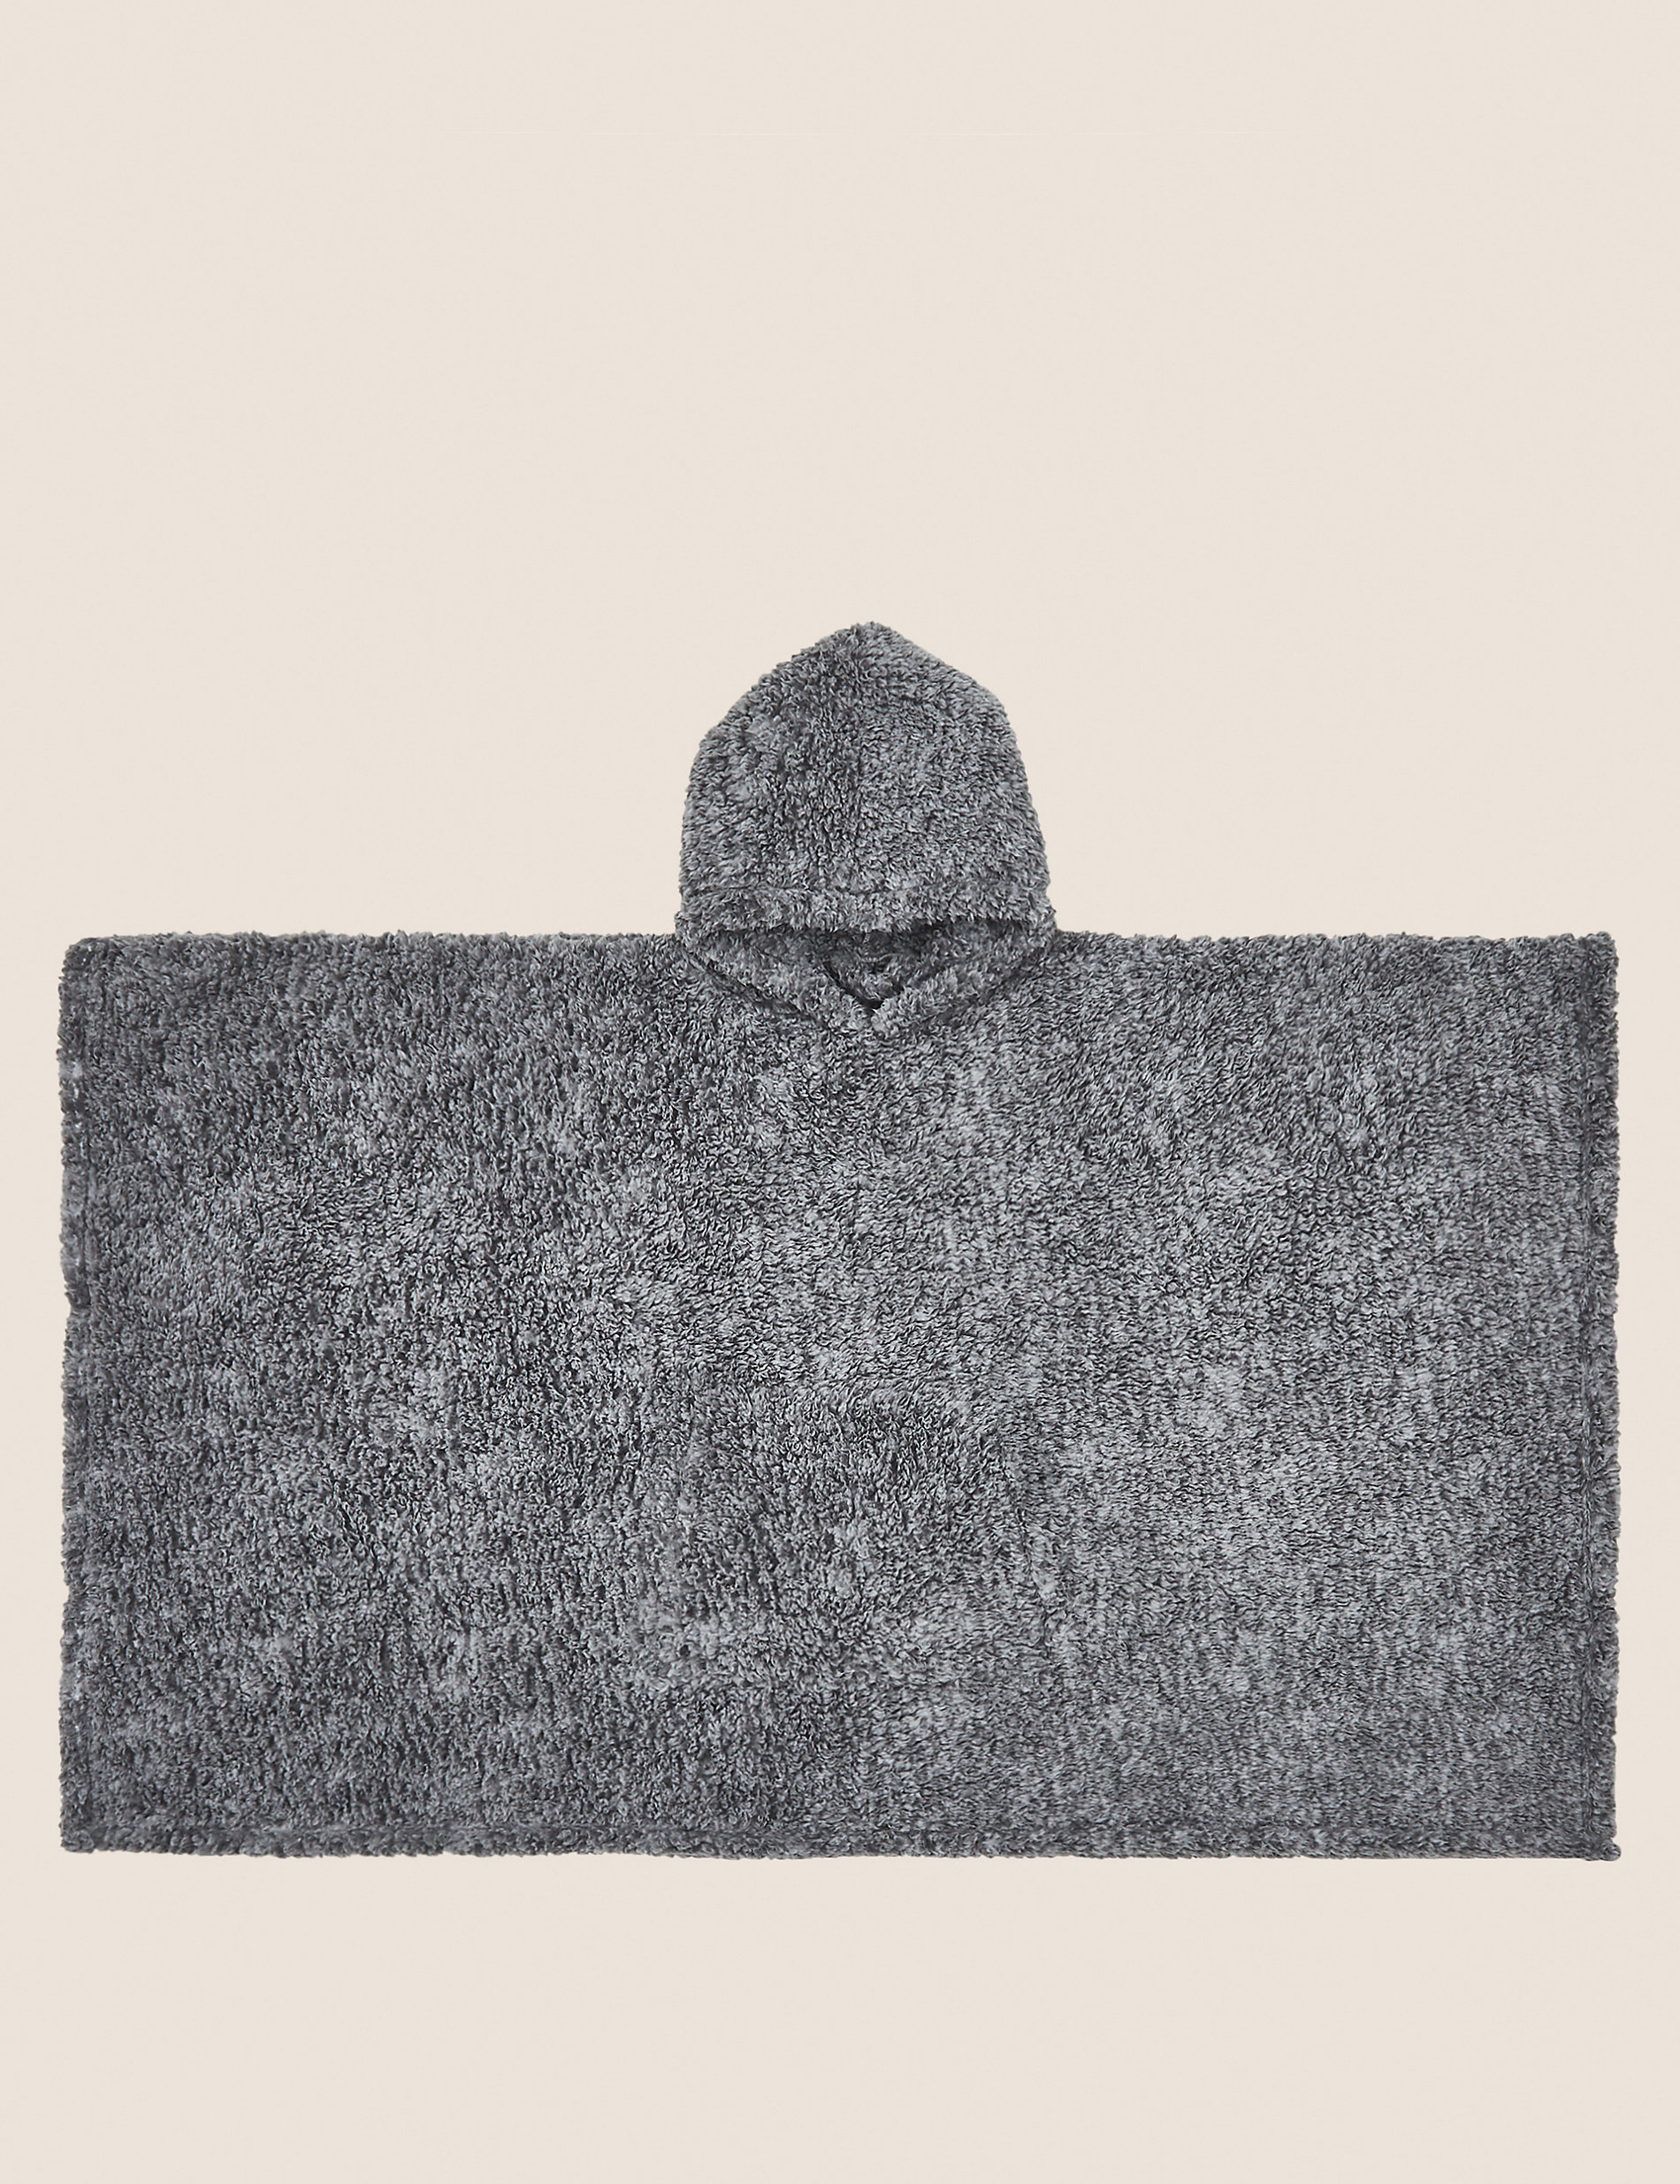 Флисовое одеяло Teddy с капюшоном The Marks & Spencer Snuggle, серый